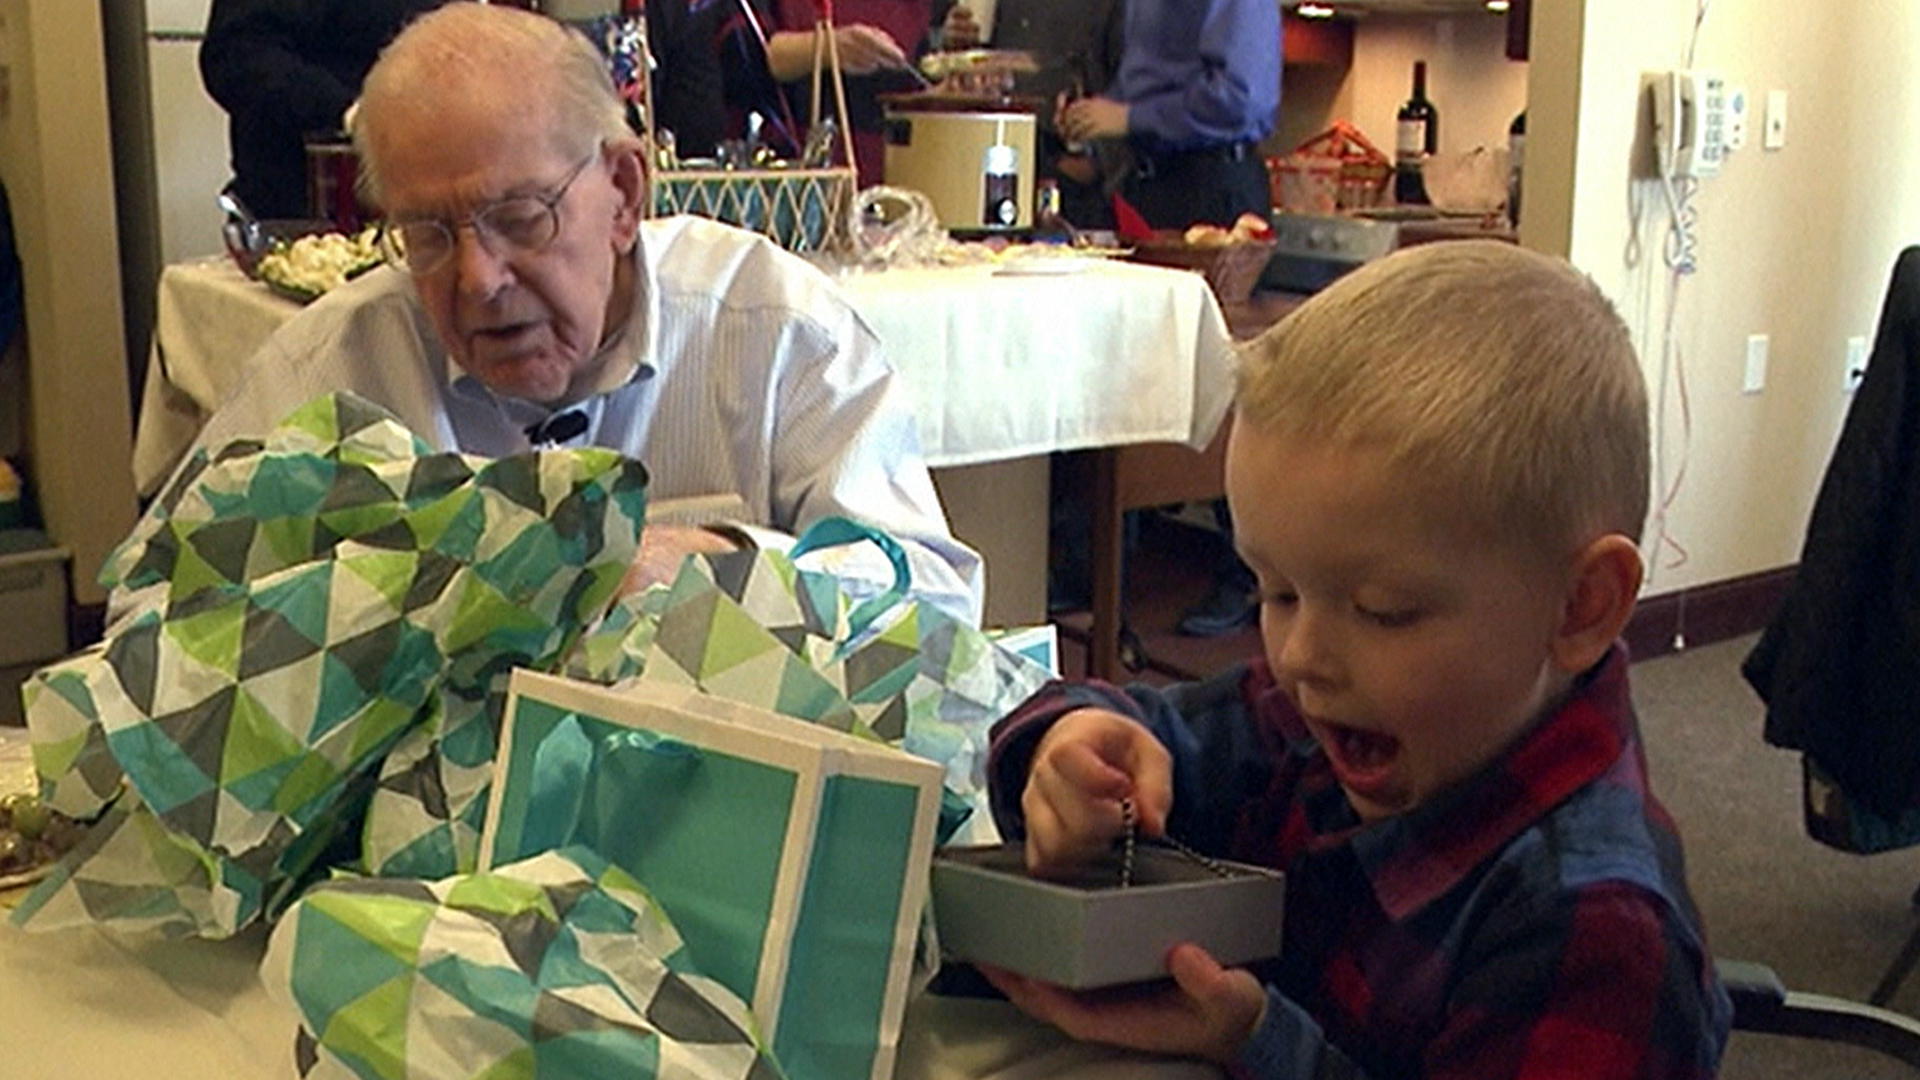 Reunited: Preschooler visits 90-year-old friend - TODAY.com